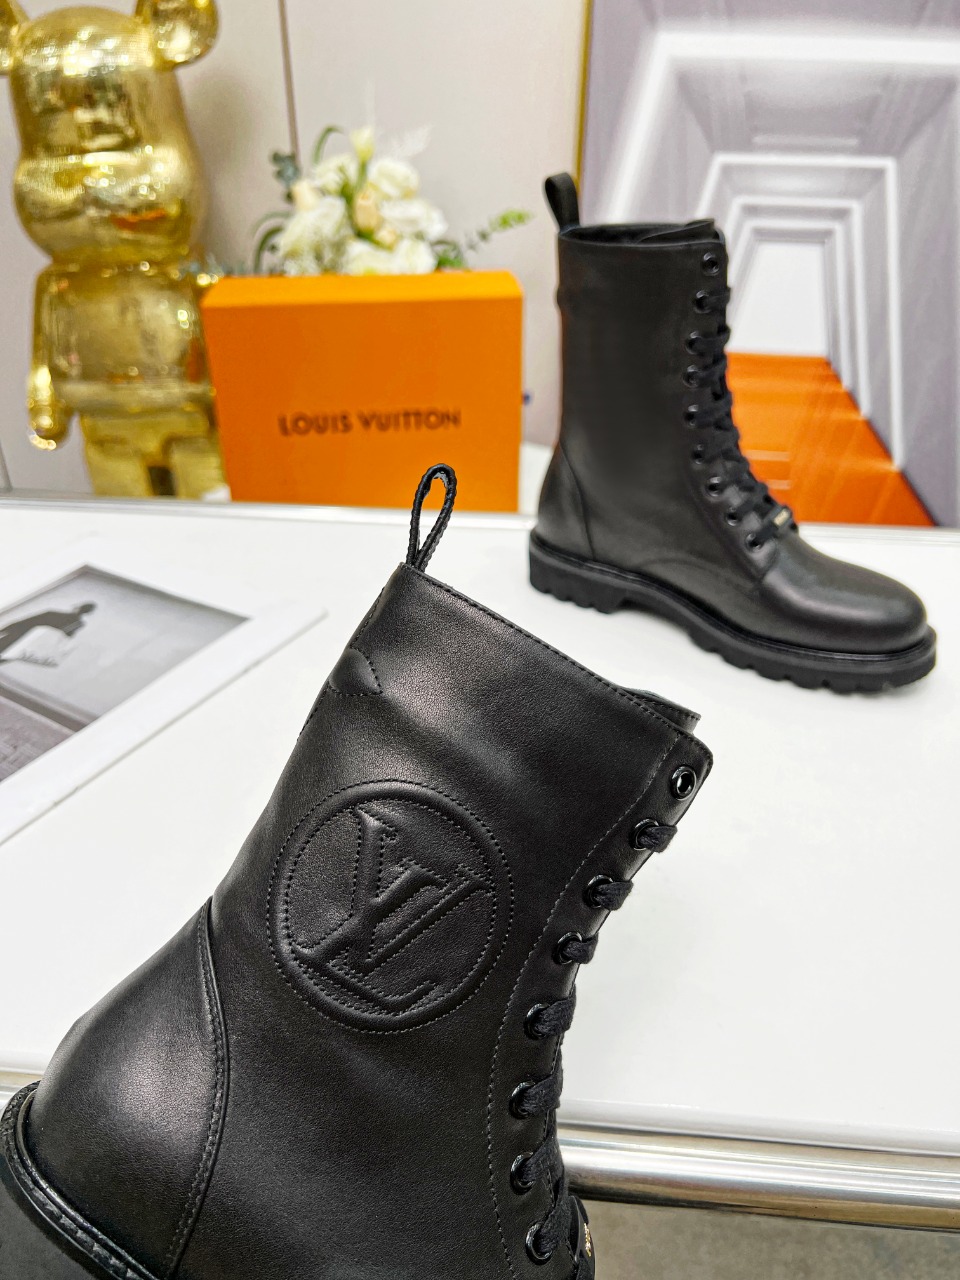 LV平底靴采用小牛皮碰撞橡胶元素VuittonLVCircle标识栖身长鞋带面橡胶外底延续军靴设计搭配M